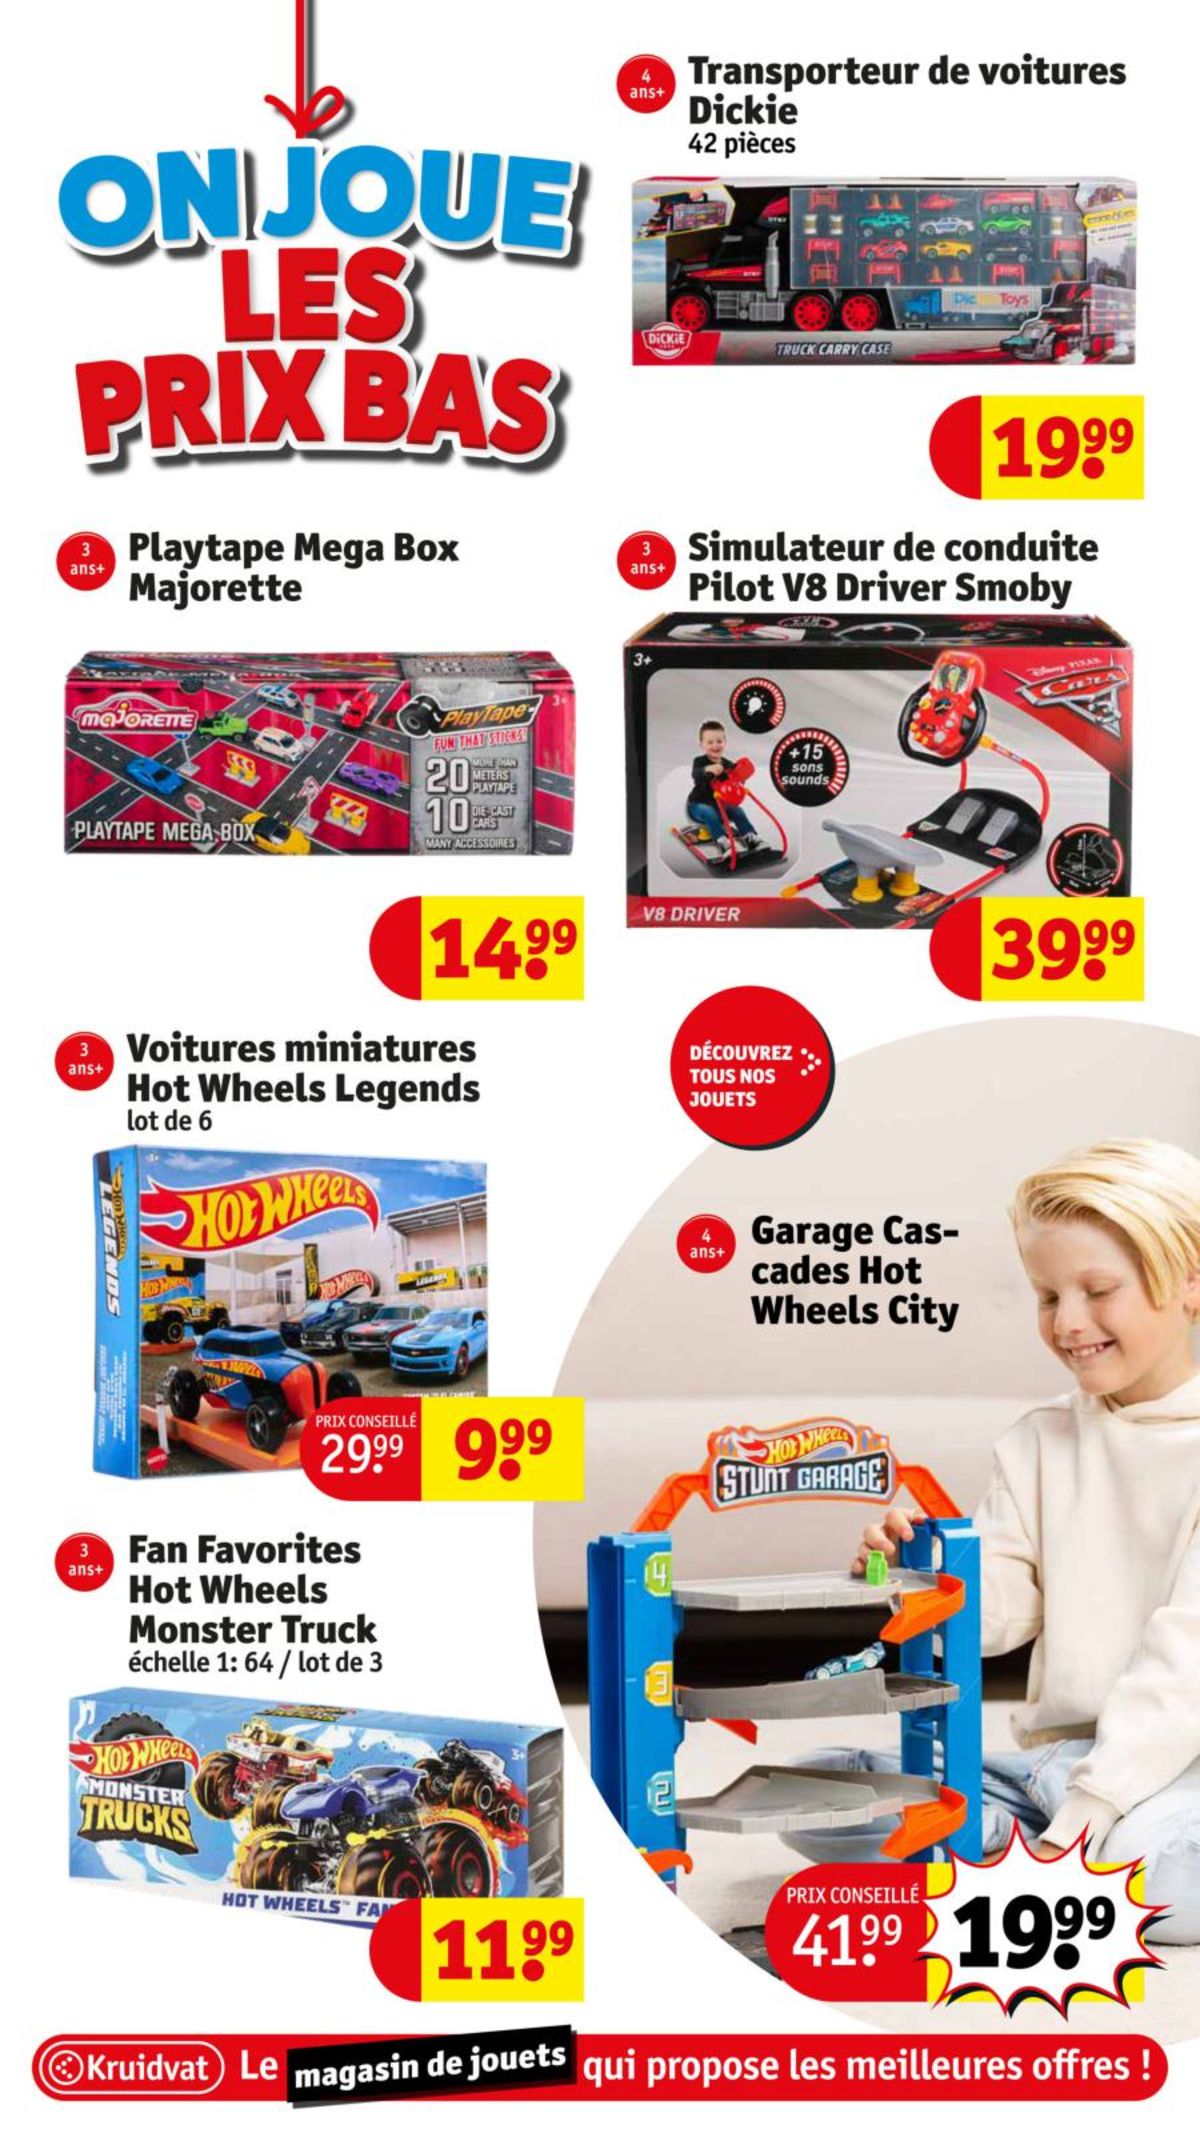 Catalogue Kruidvat speelgoedfolder, page 00014